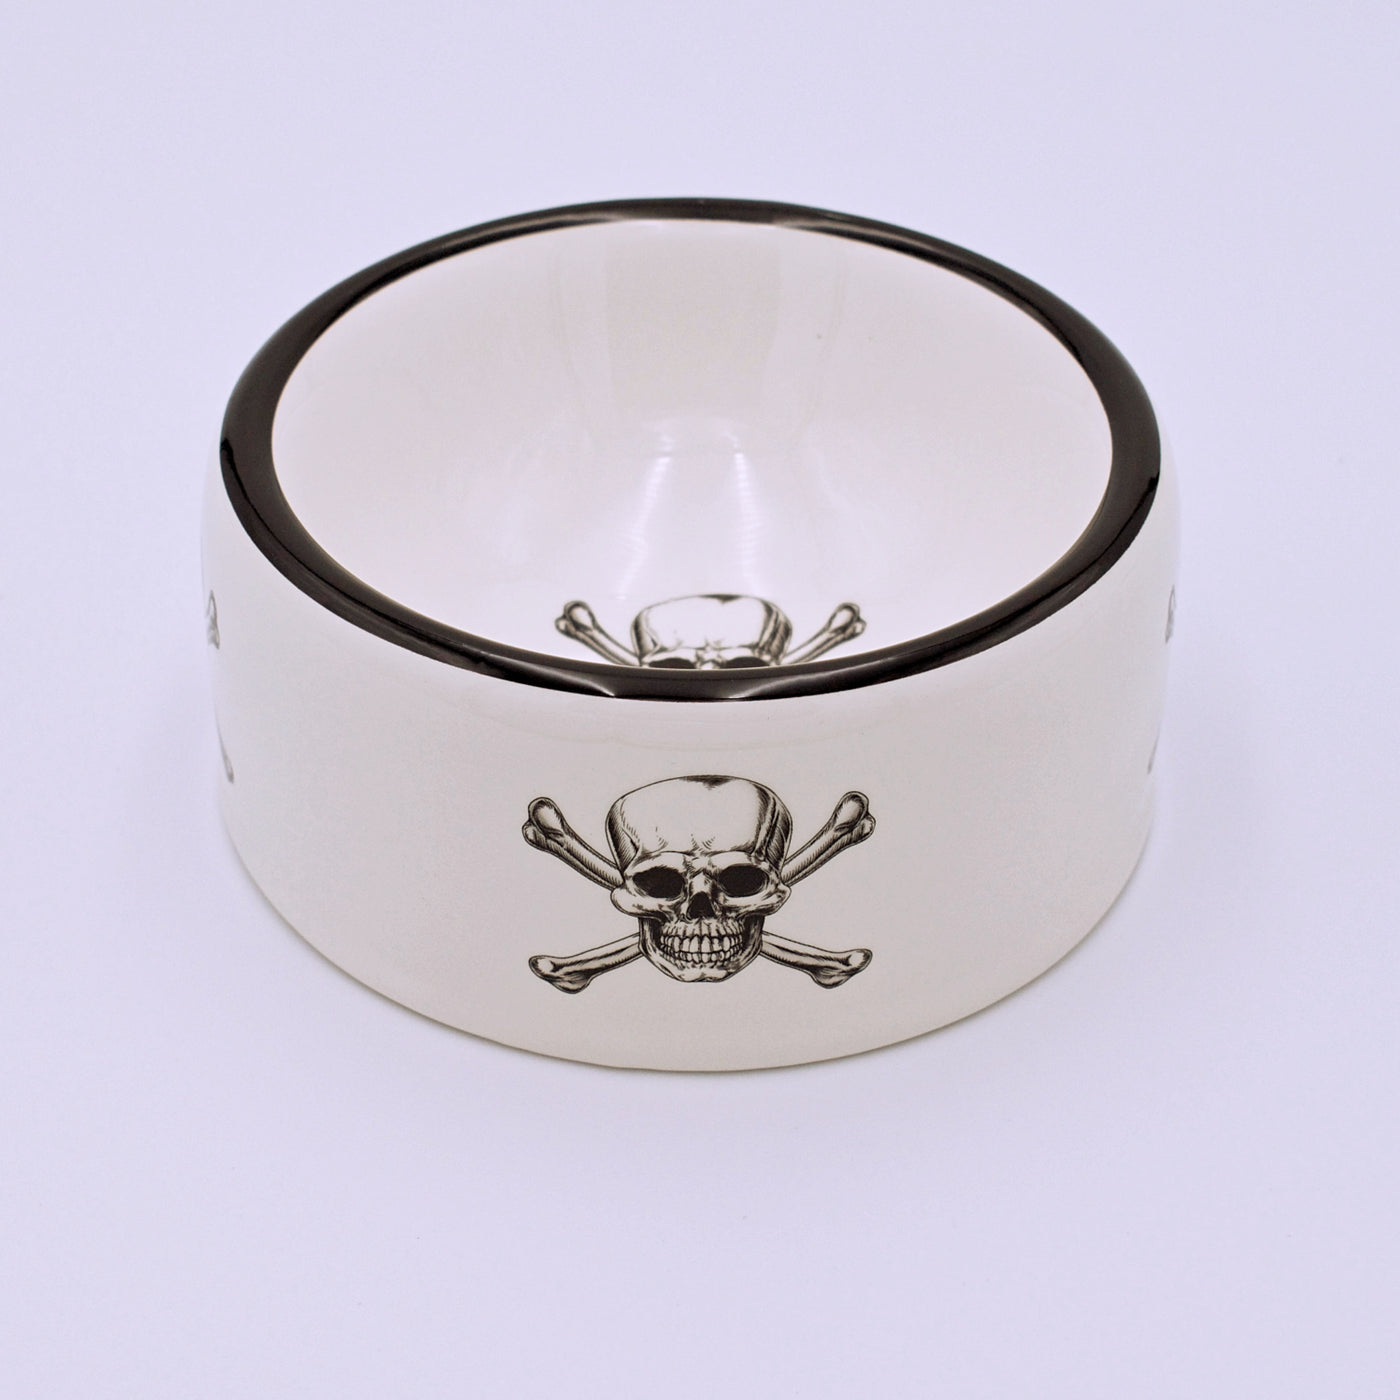 Skull and Crossbones Ceramic Small Pet Bowl - The Cranio Collections